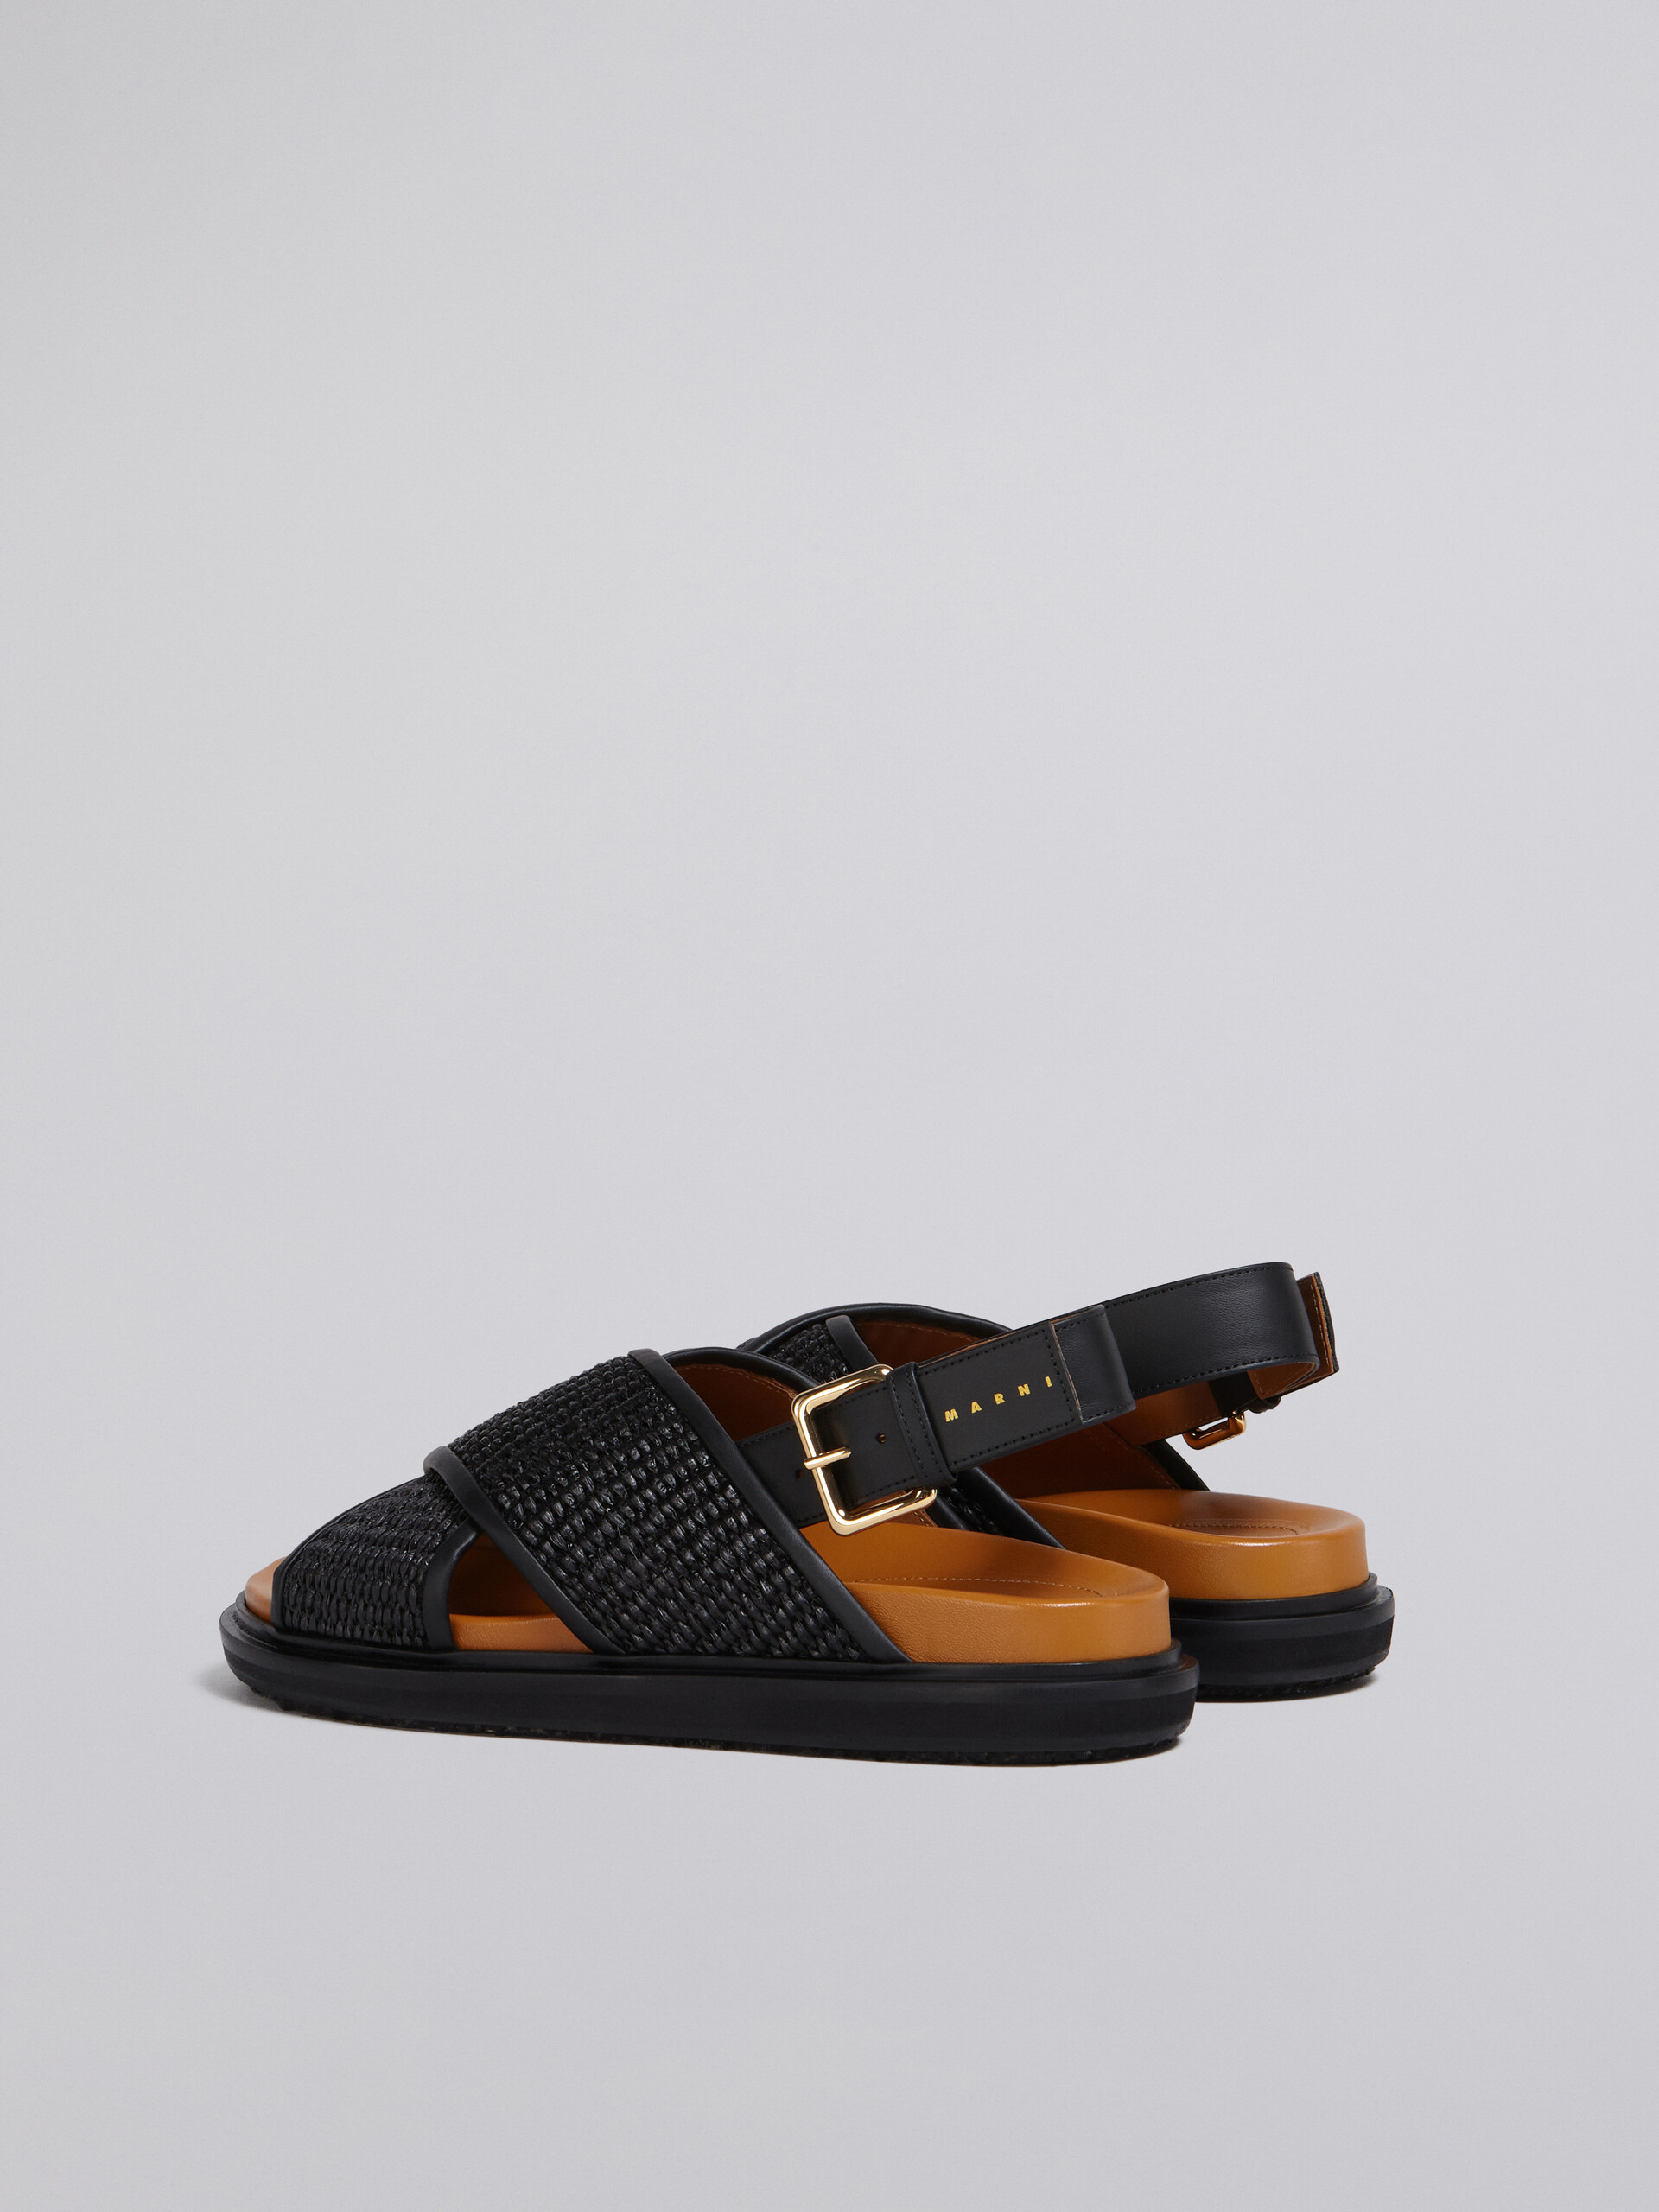 Black raffia and leather fussbett - Sandals - Image 3